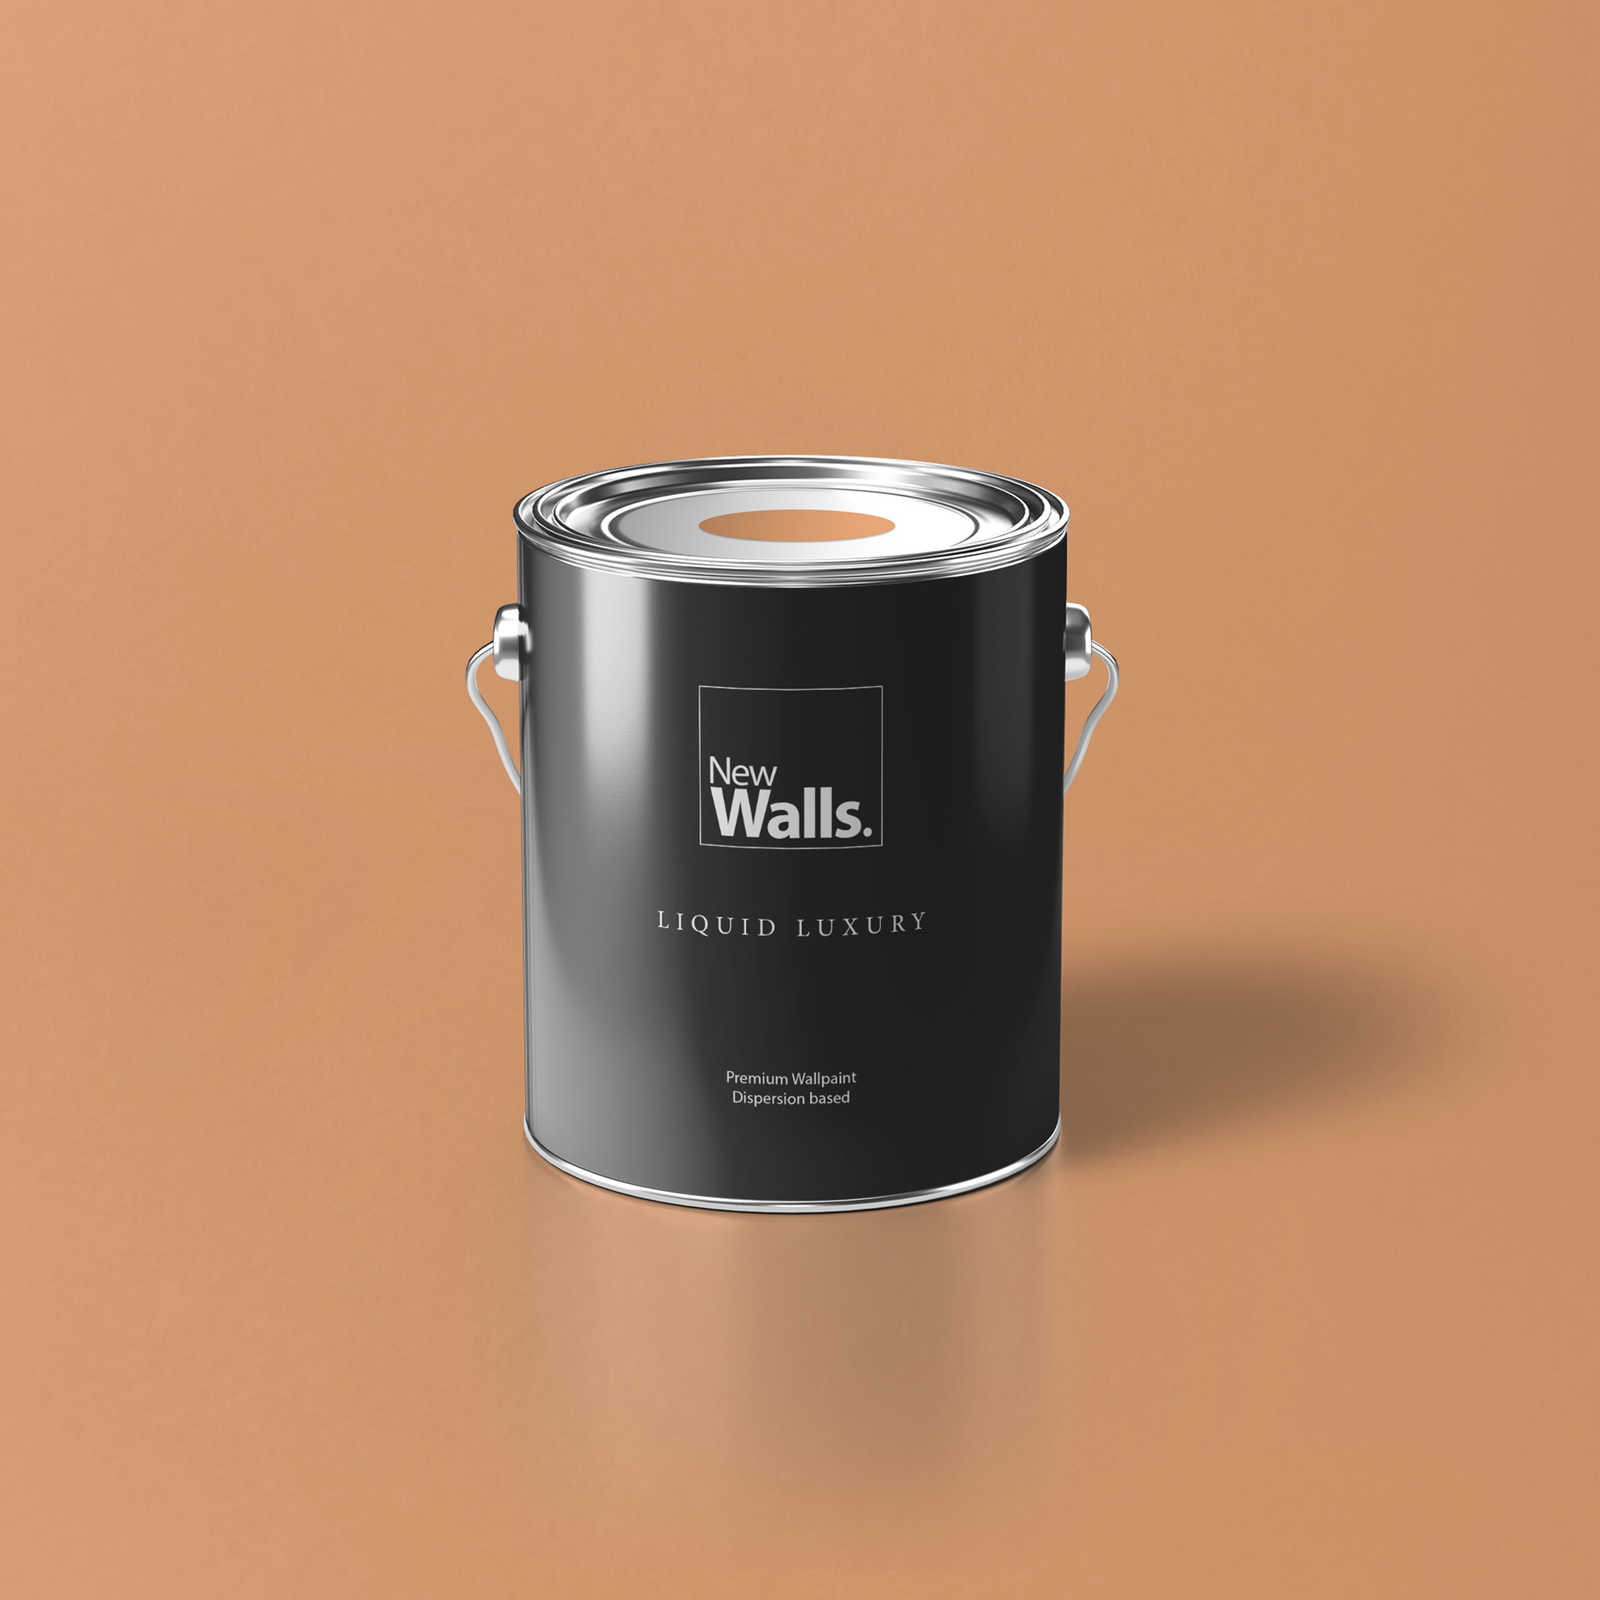 Premium Wall Paint Awakening Apricot »Pretty Peach« NW901 – 2.5 litre
